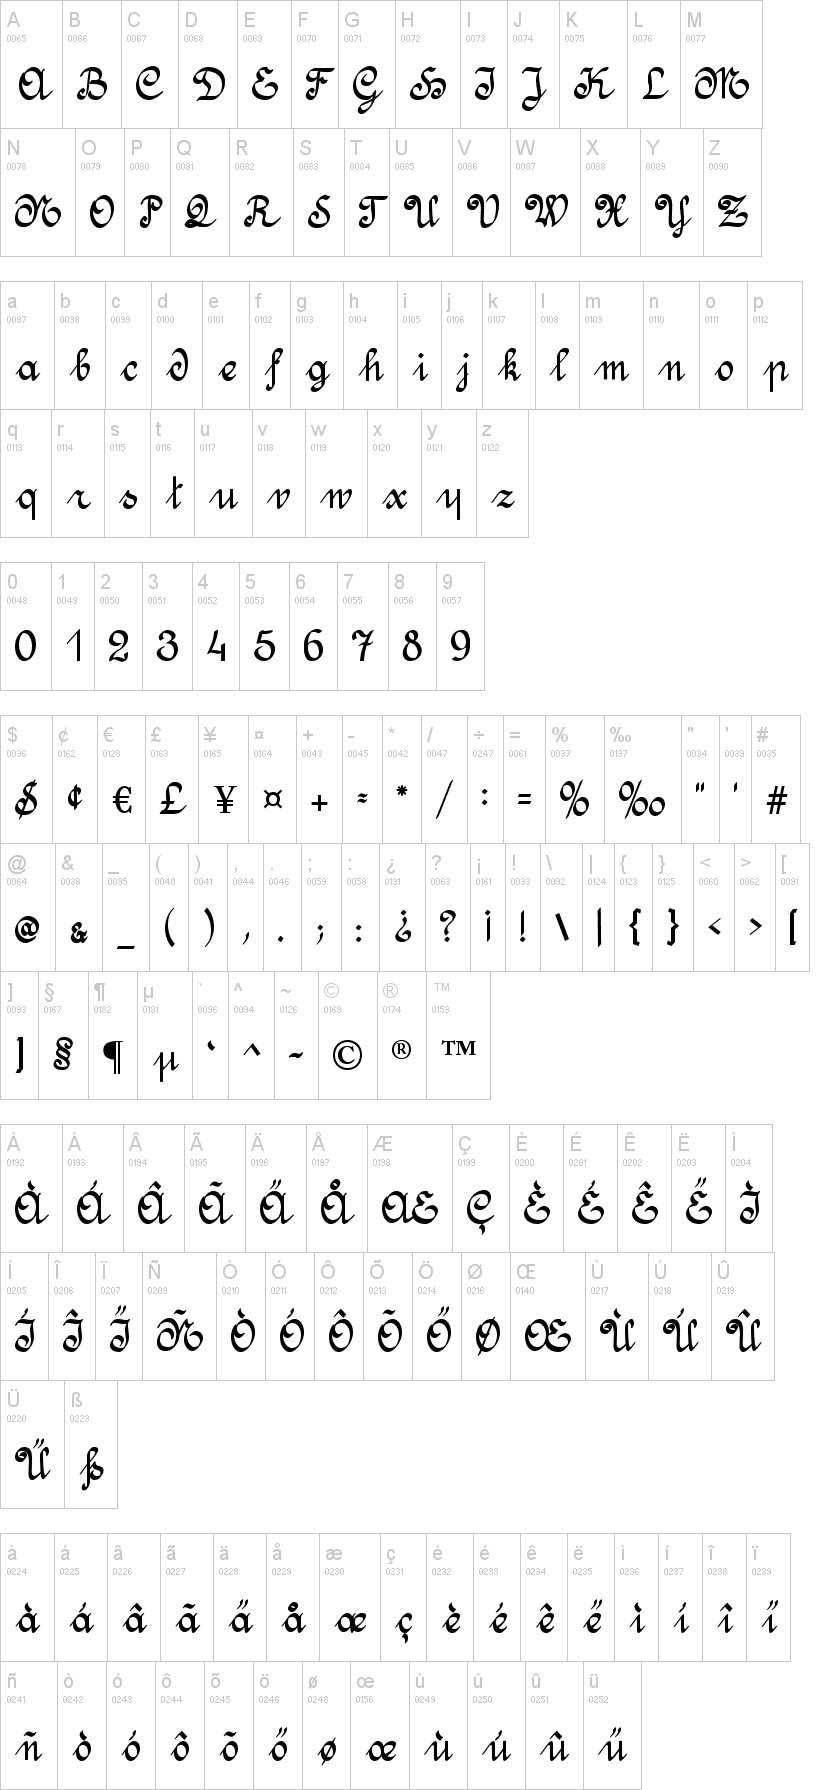 Amptmann Script